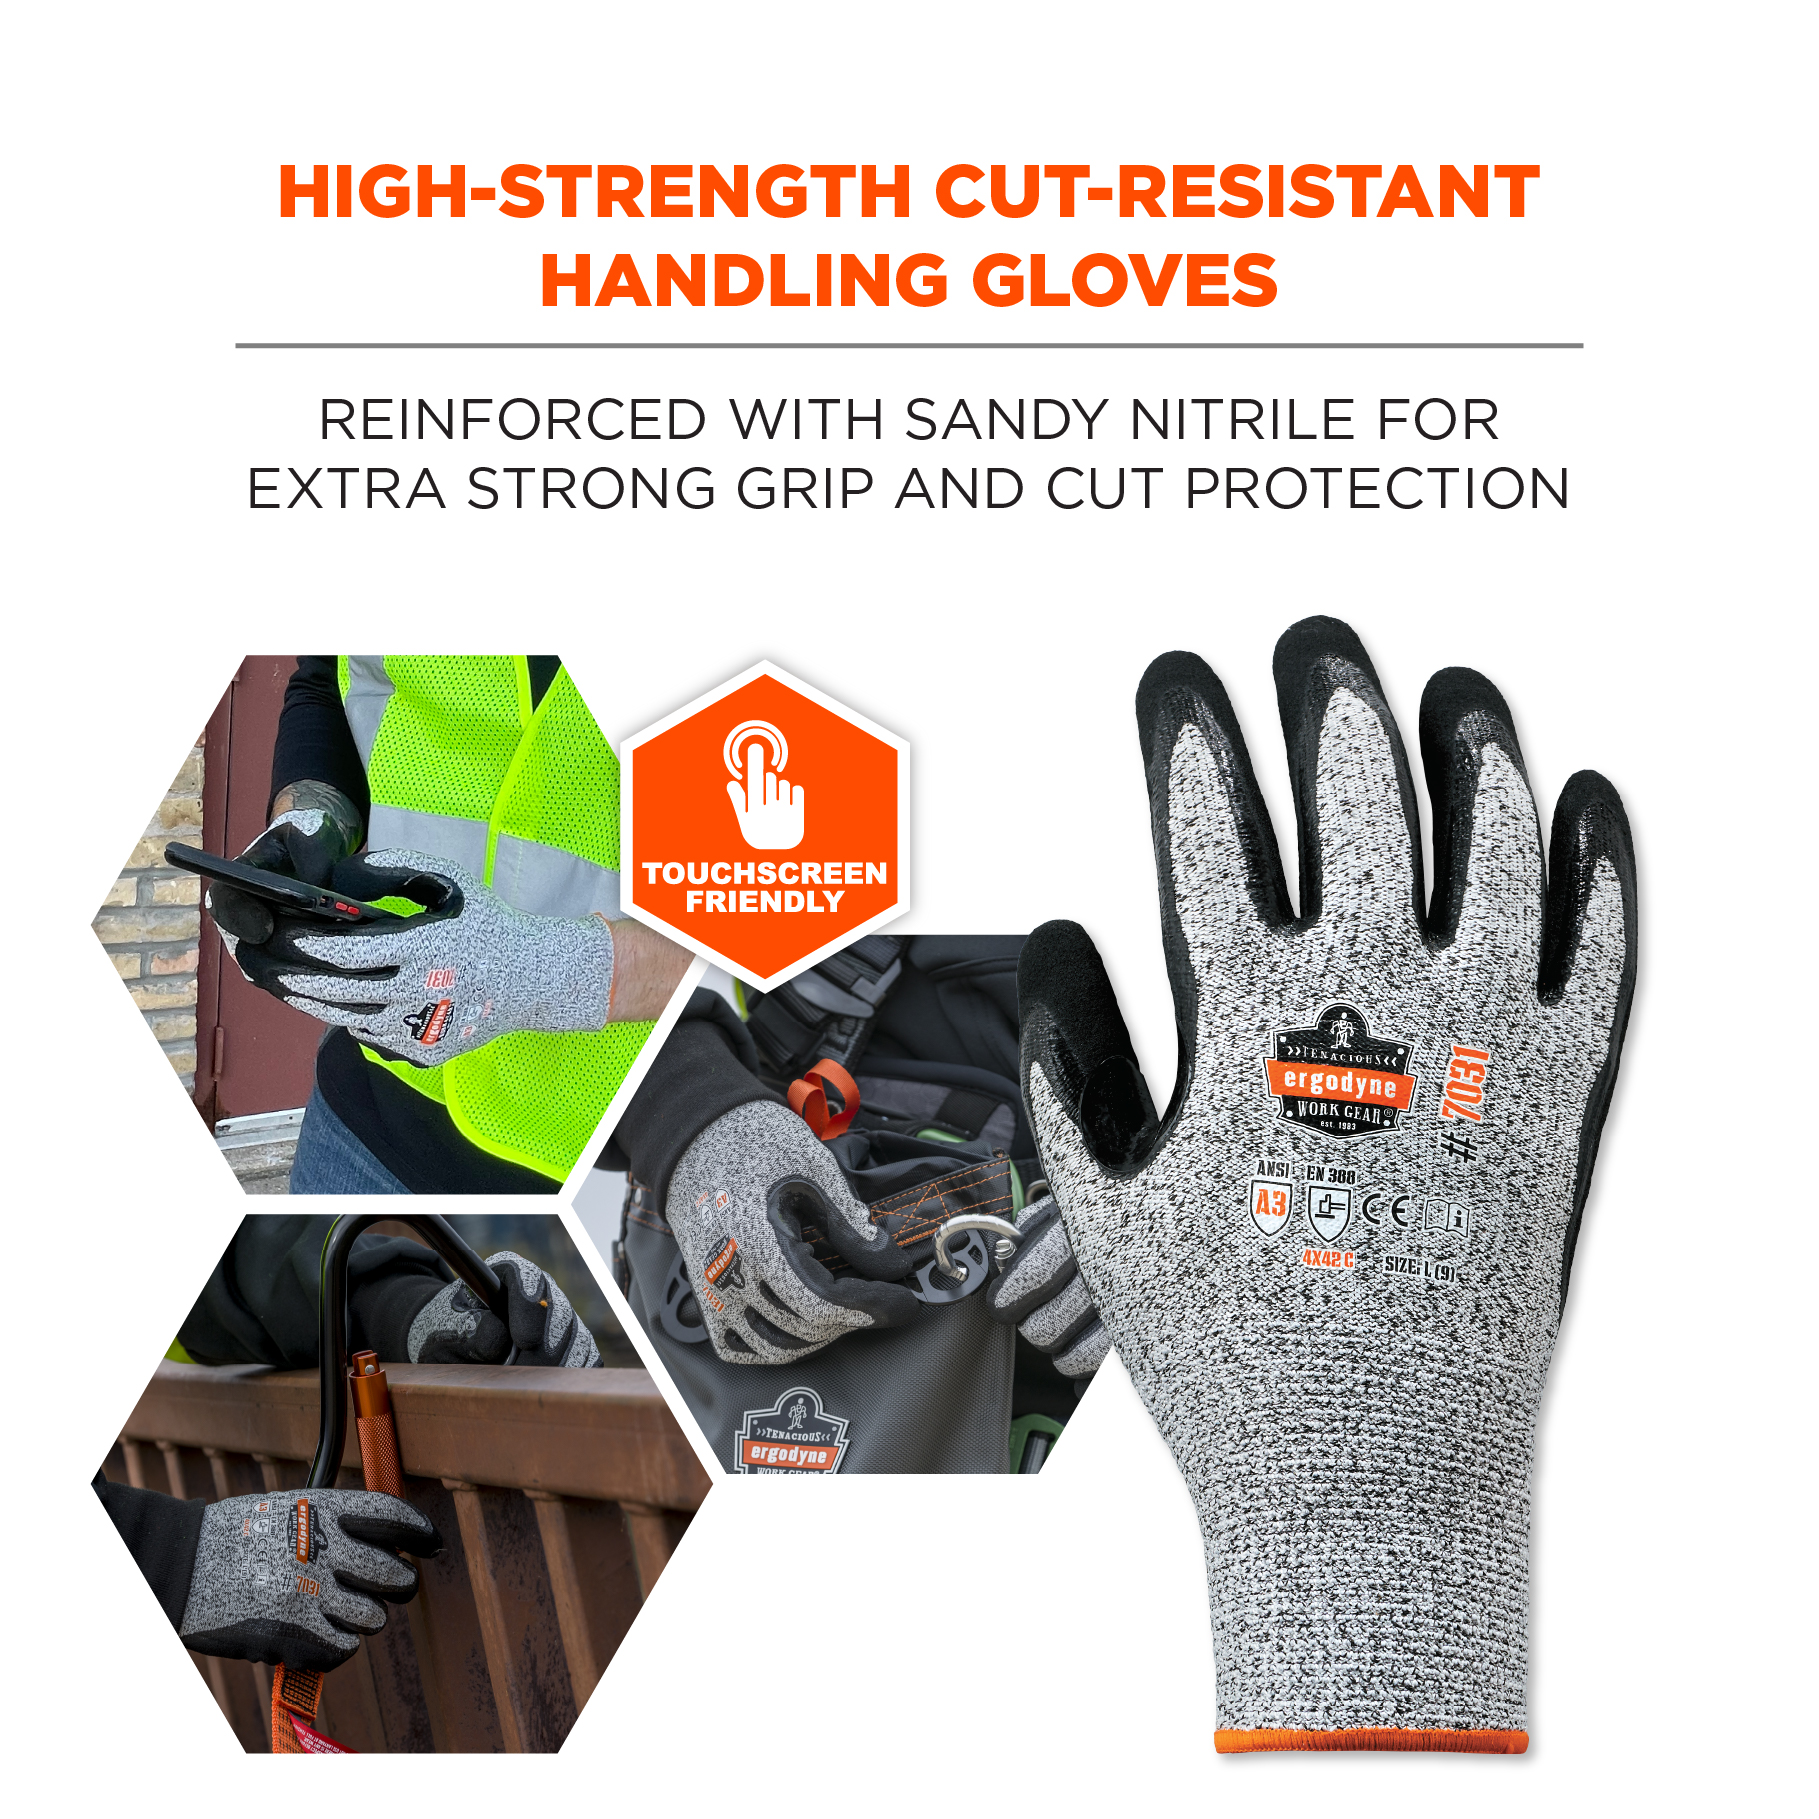 https://www.ergodyne.com/sites/default/files/product-images/17982-7031-nitrile-coated-cut-resistant-gloves-high-strength-cut-resistant-handling-gloves_0.jpg